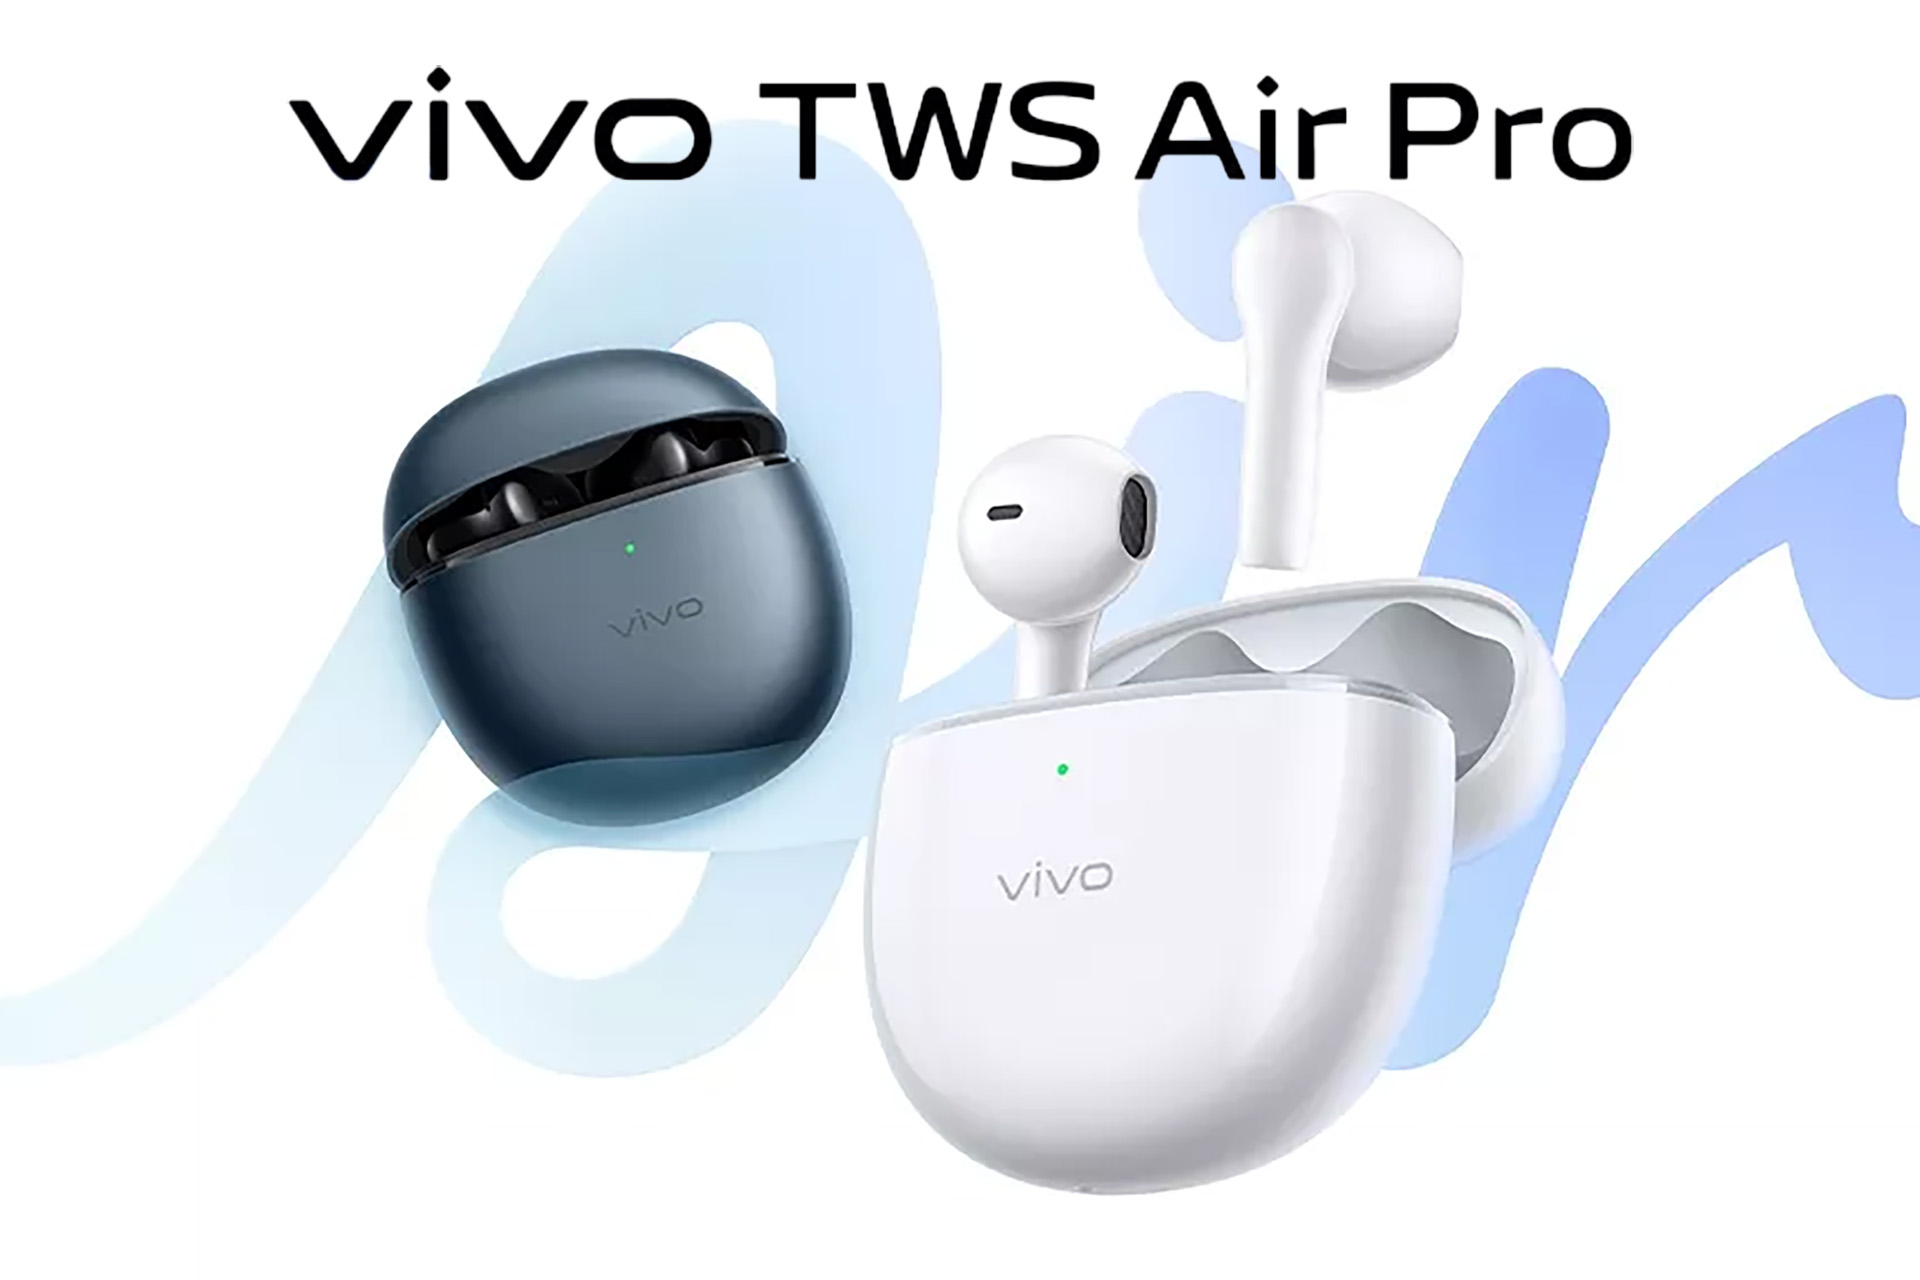 Vivo TWS 2 Earphone Wireless Bluetooth Headset Price - Vivo Smart